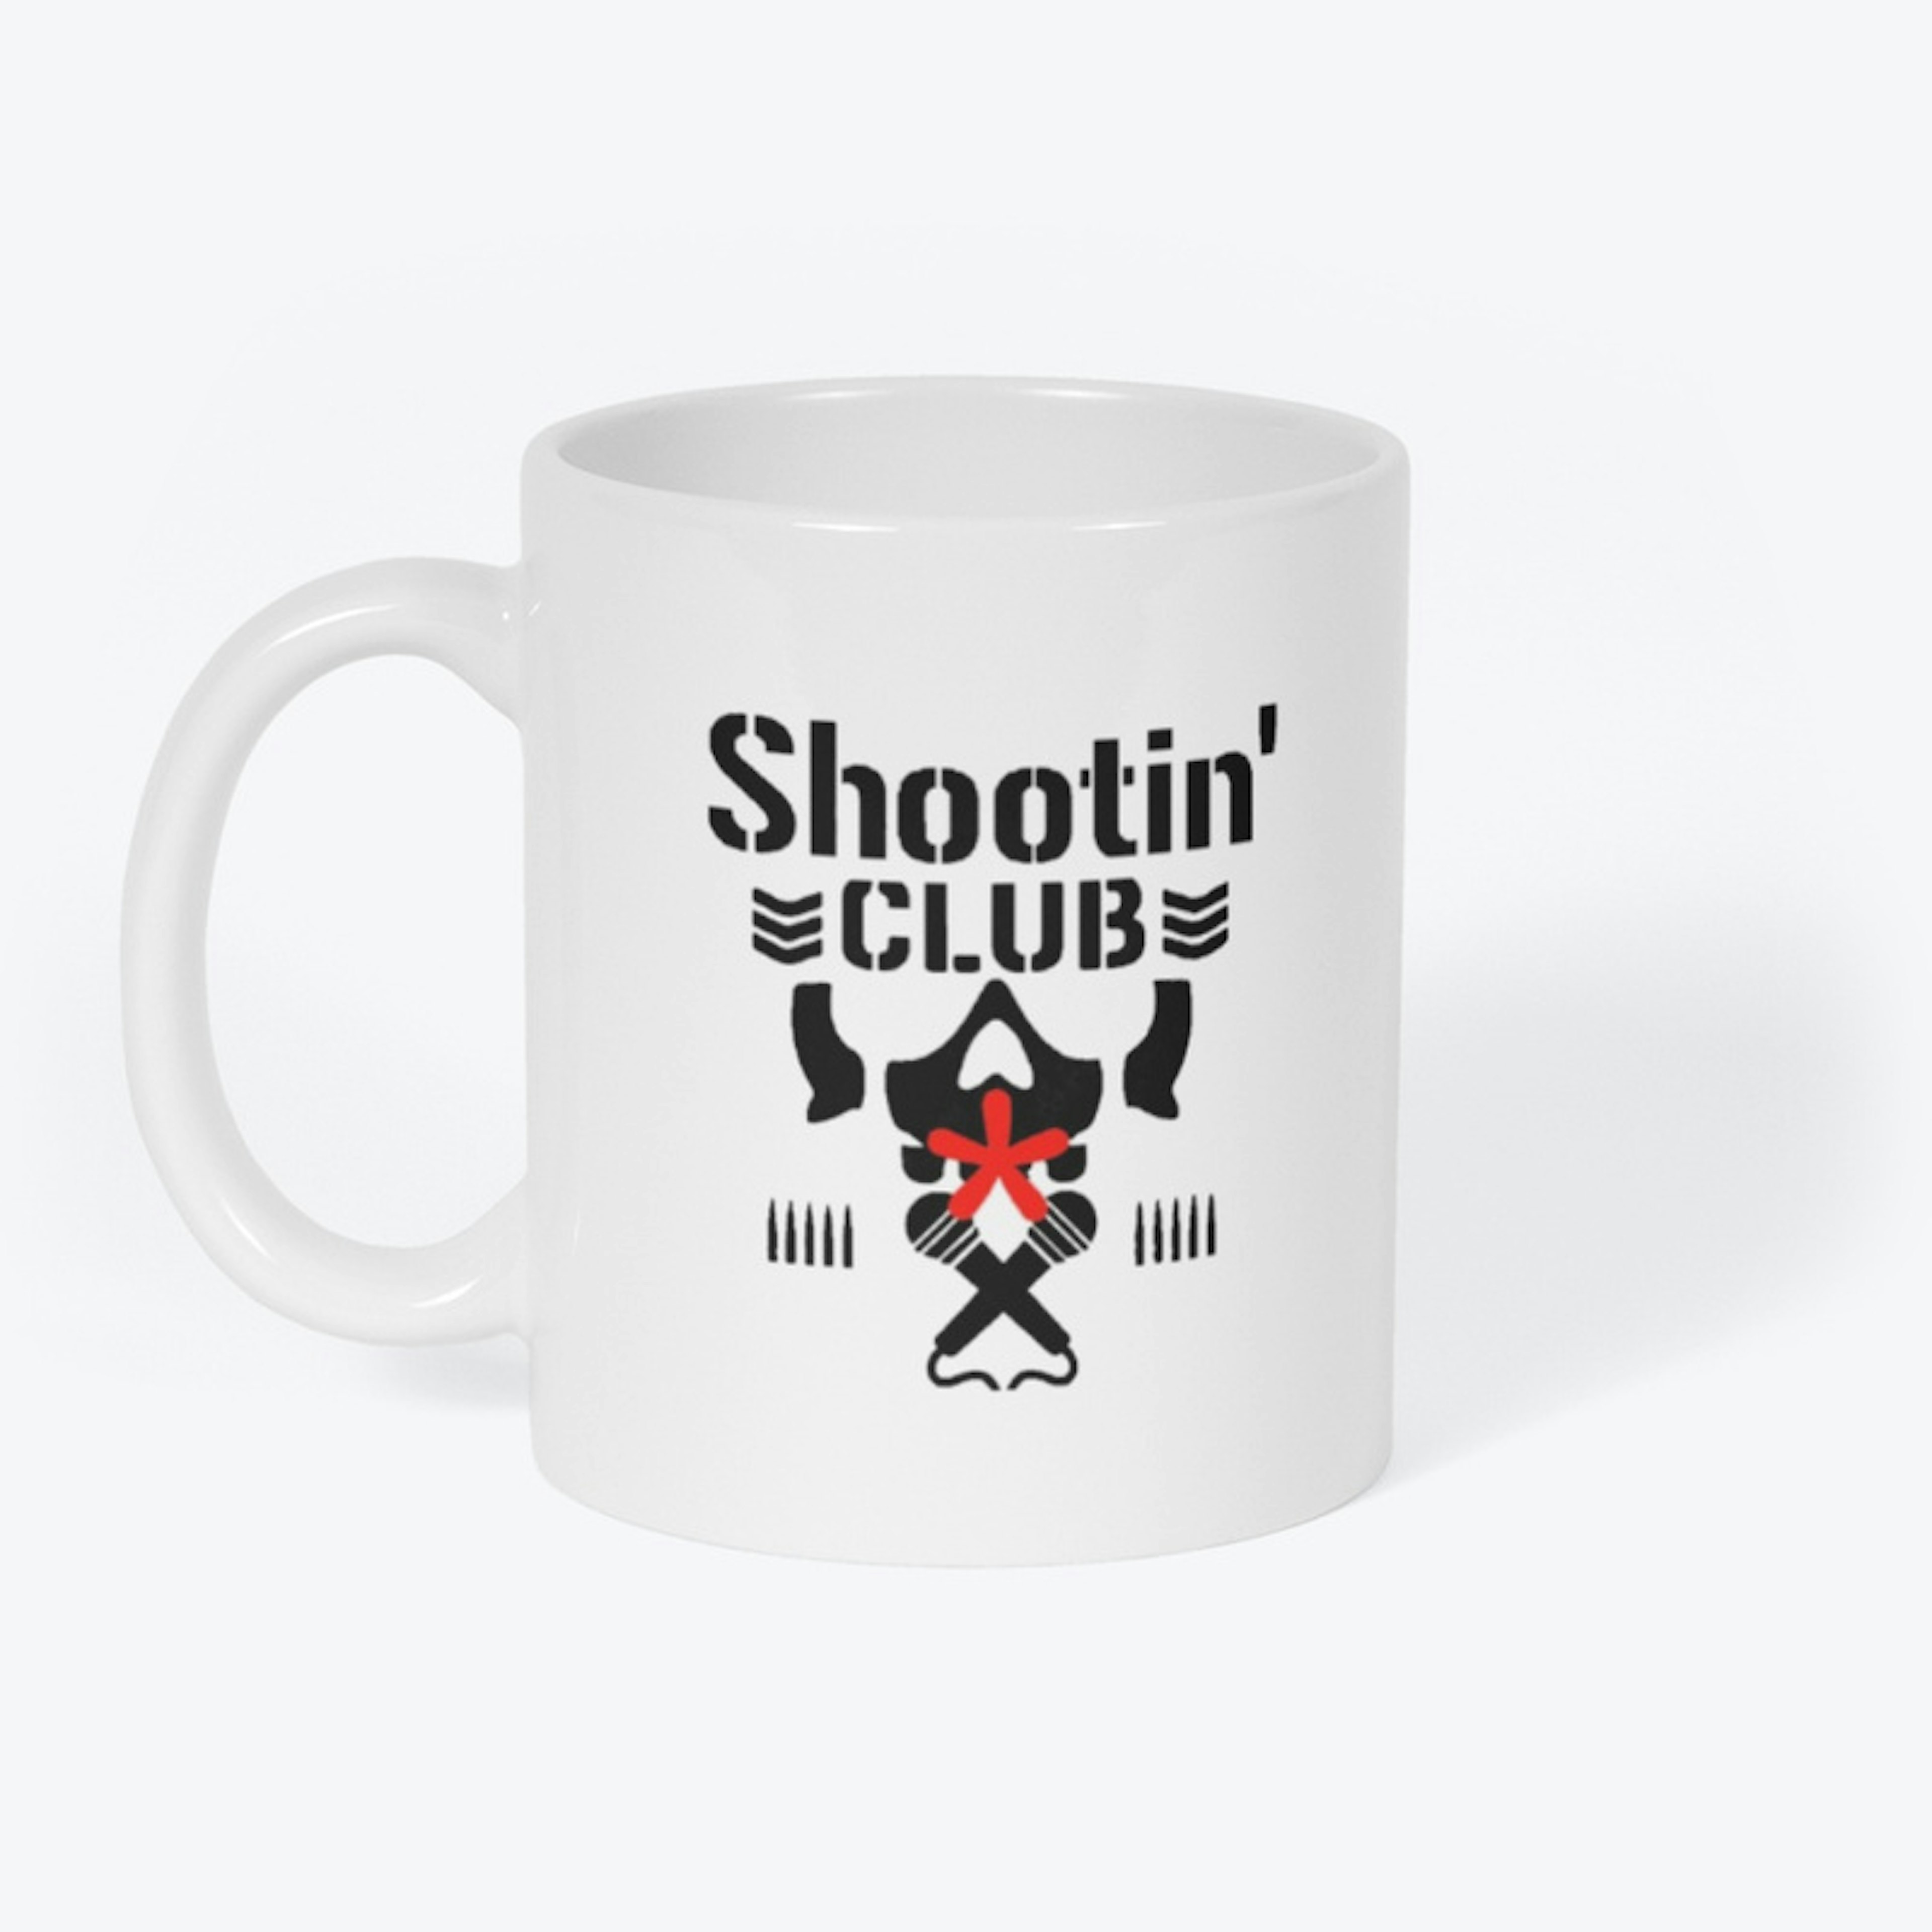 Shootin Club